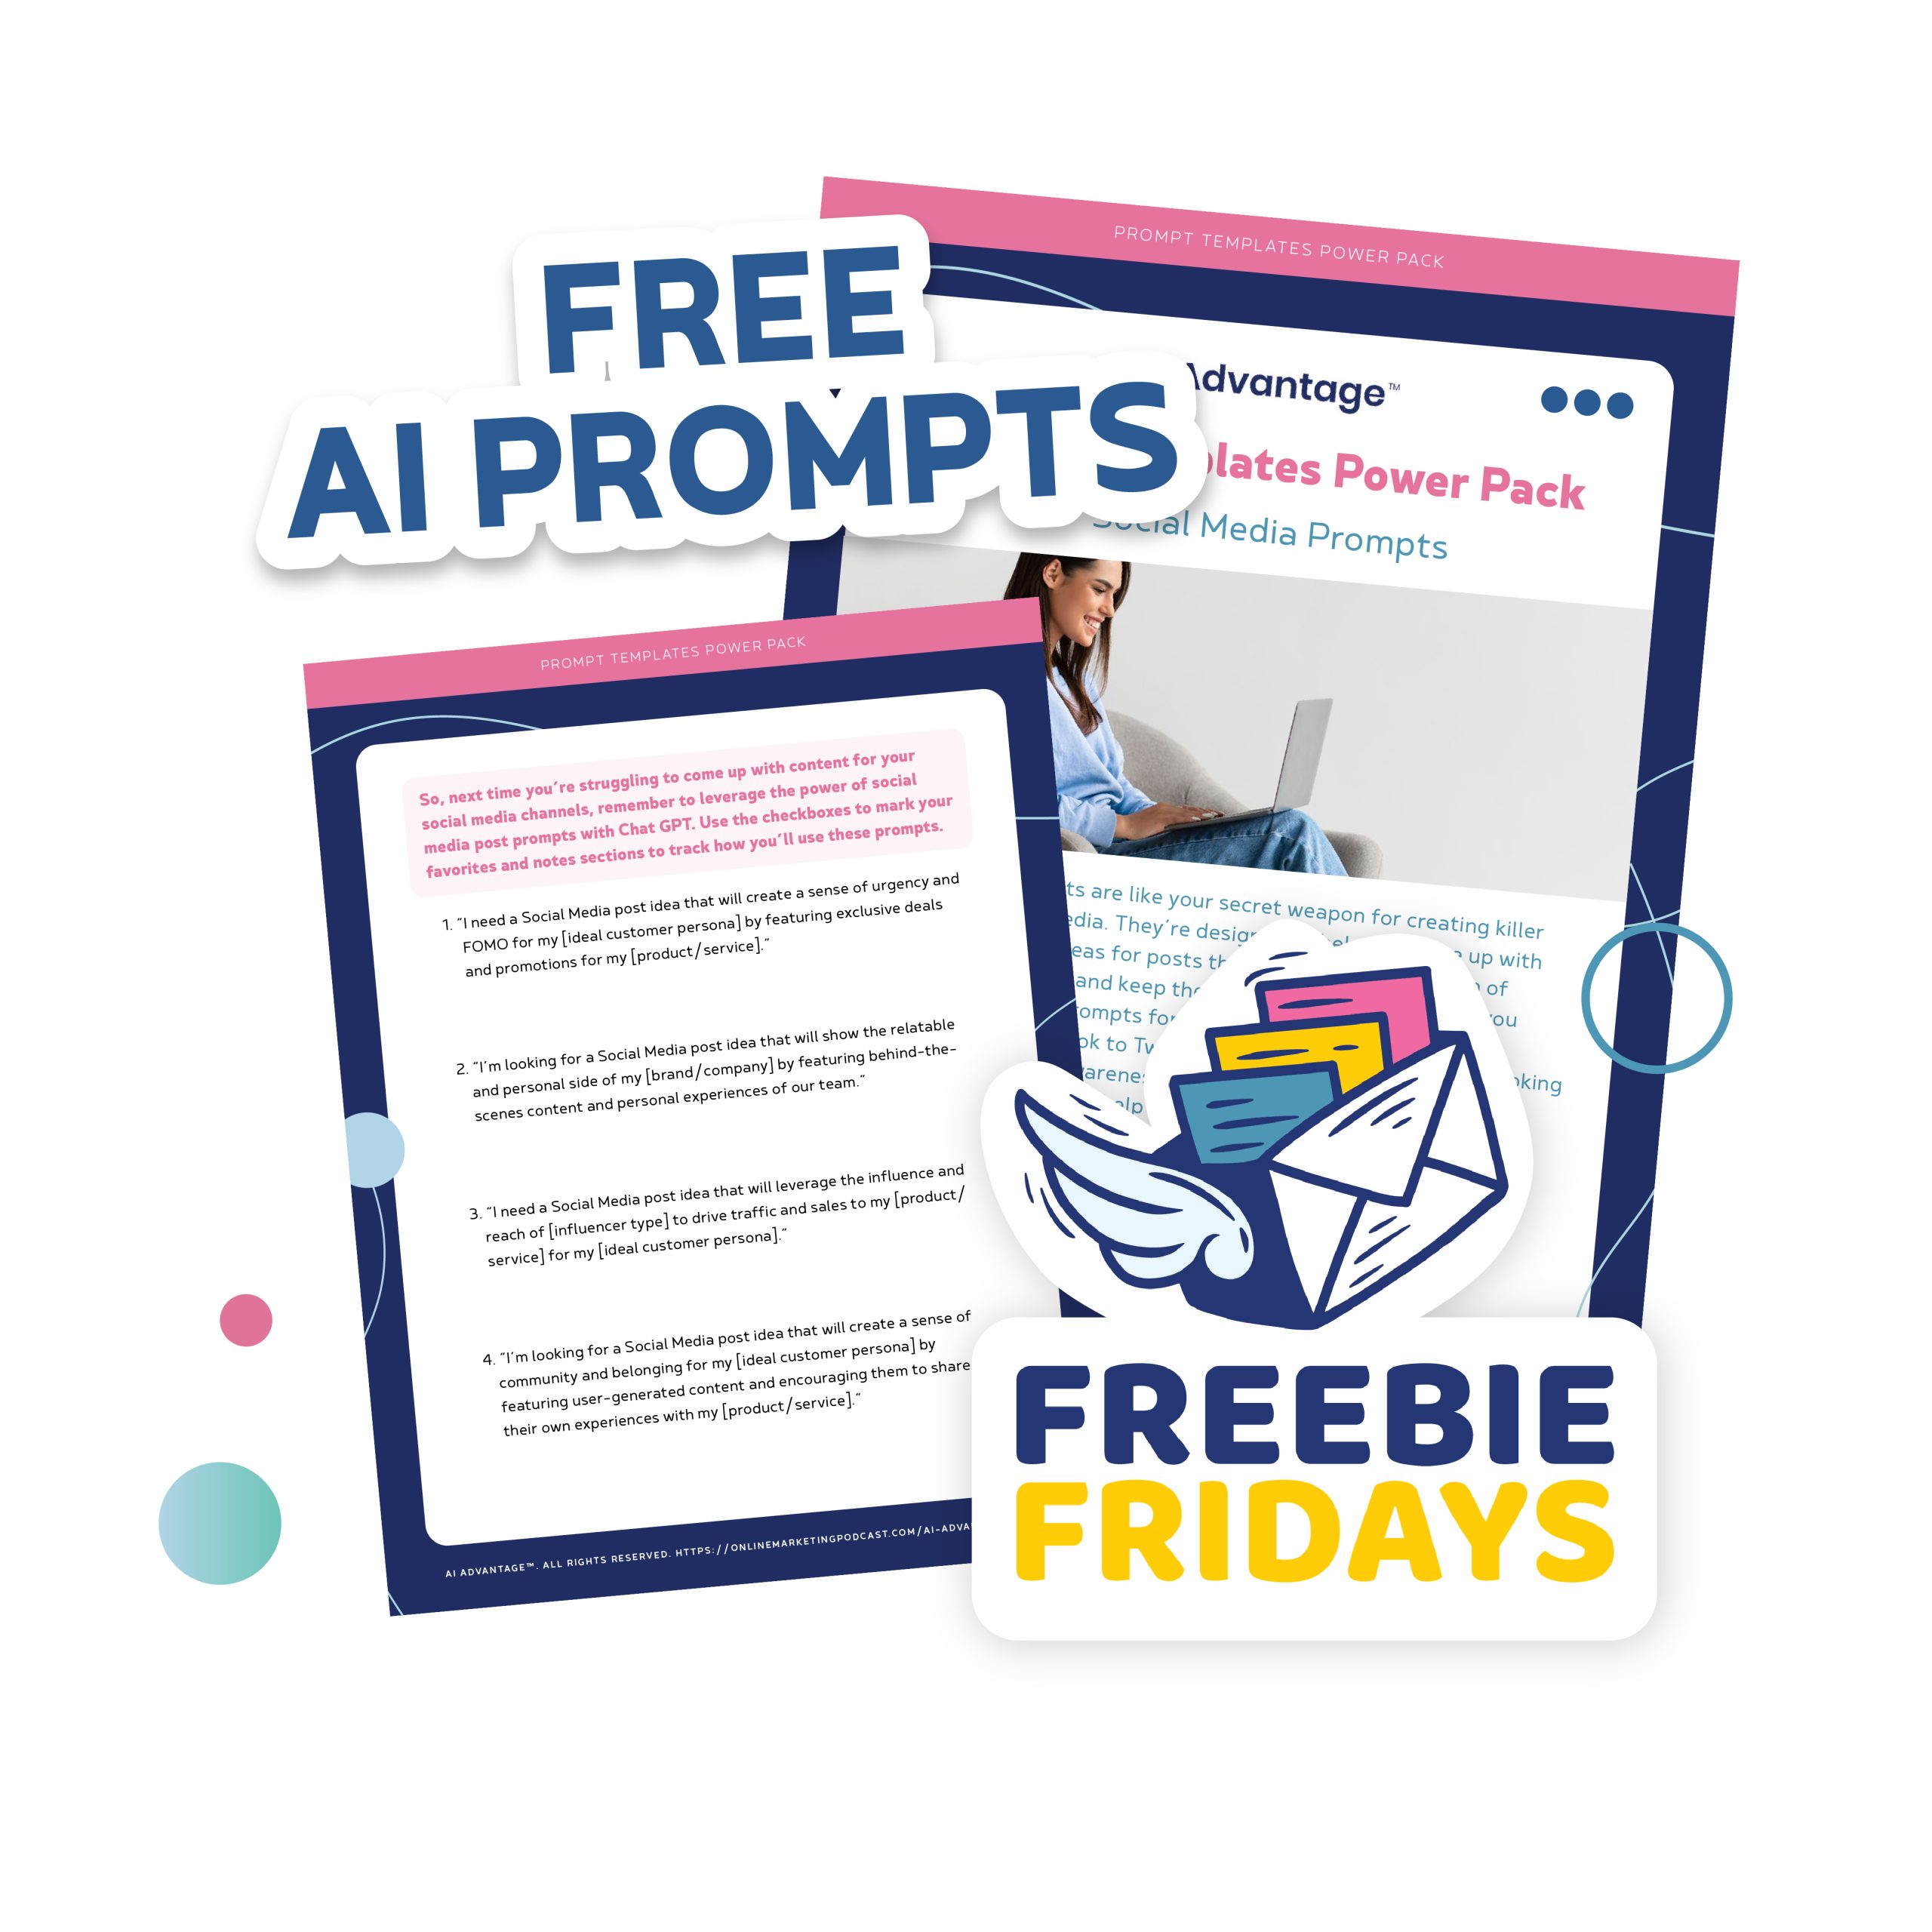 Freebie Fridays- Free AI Prompts